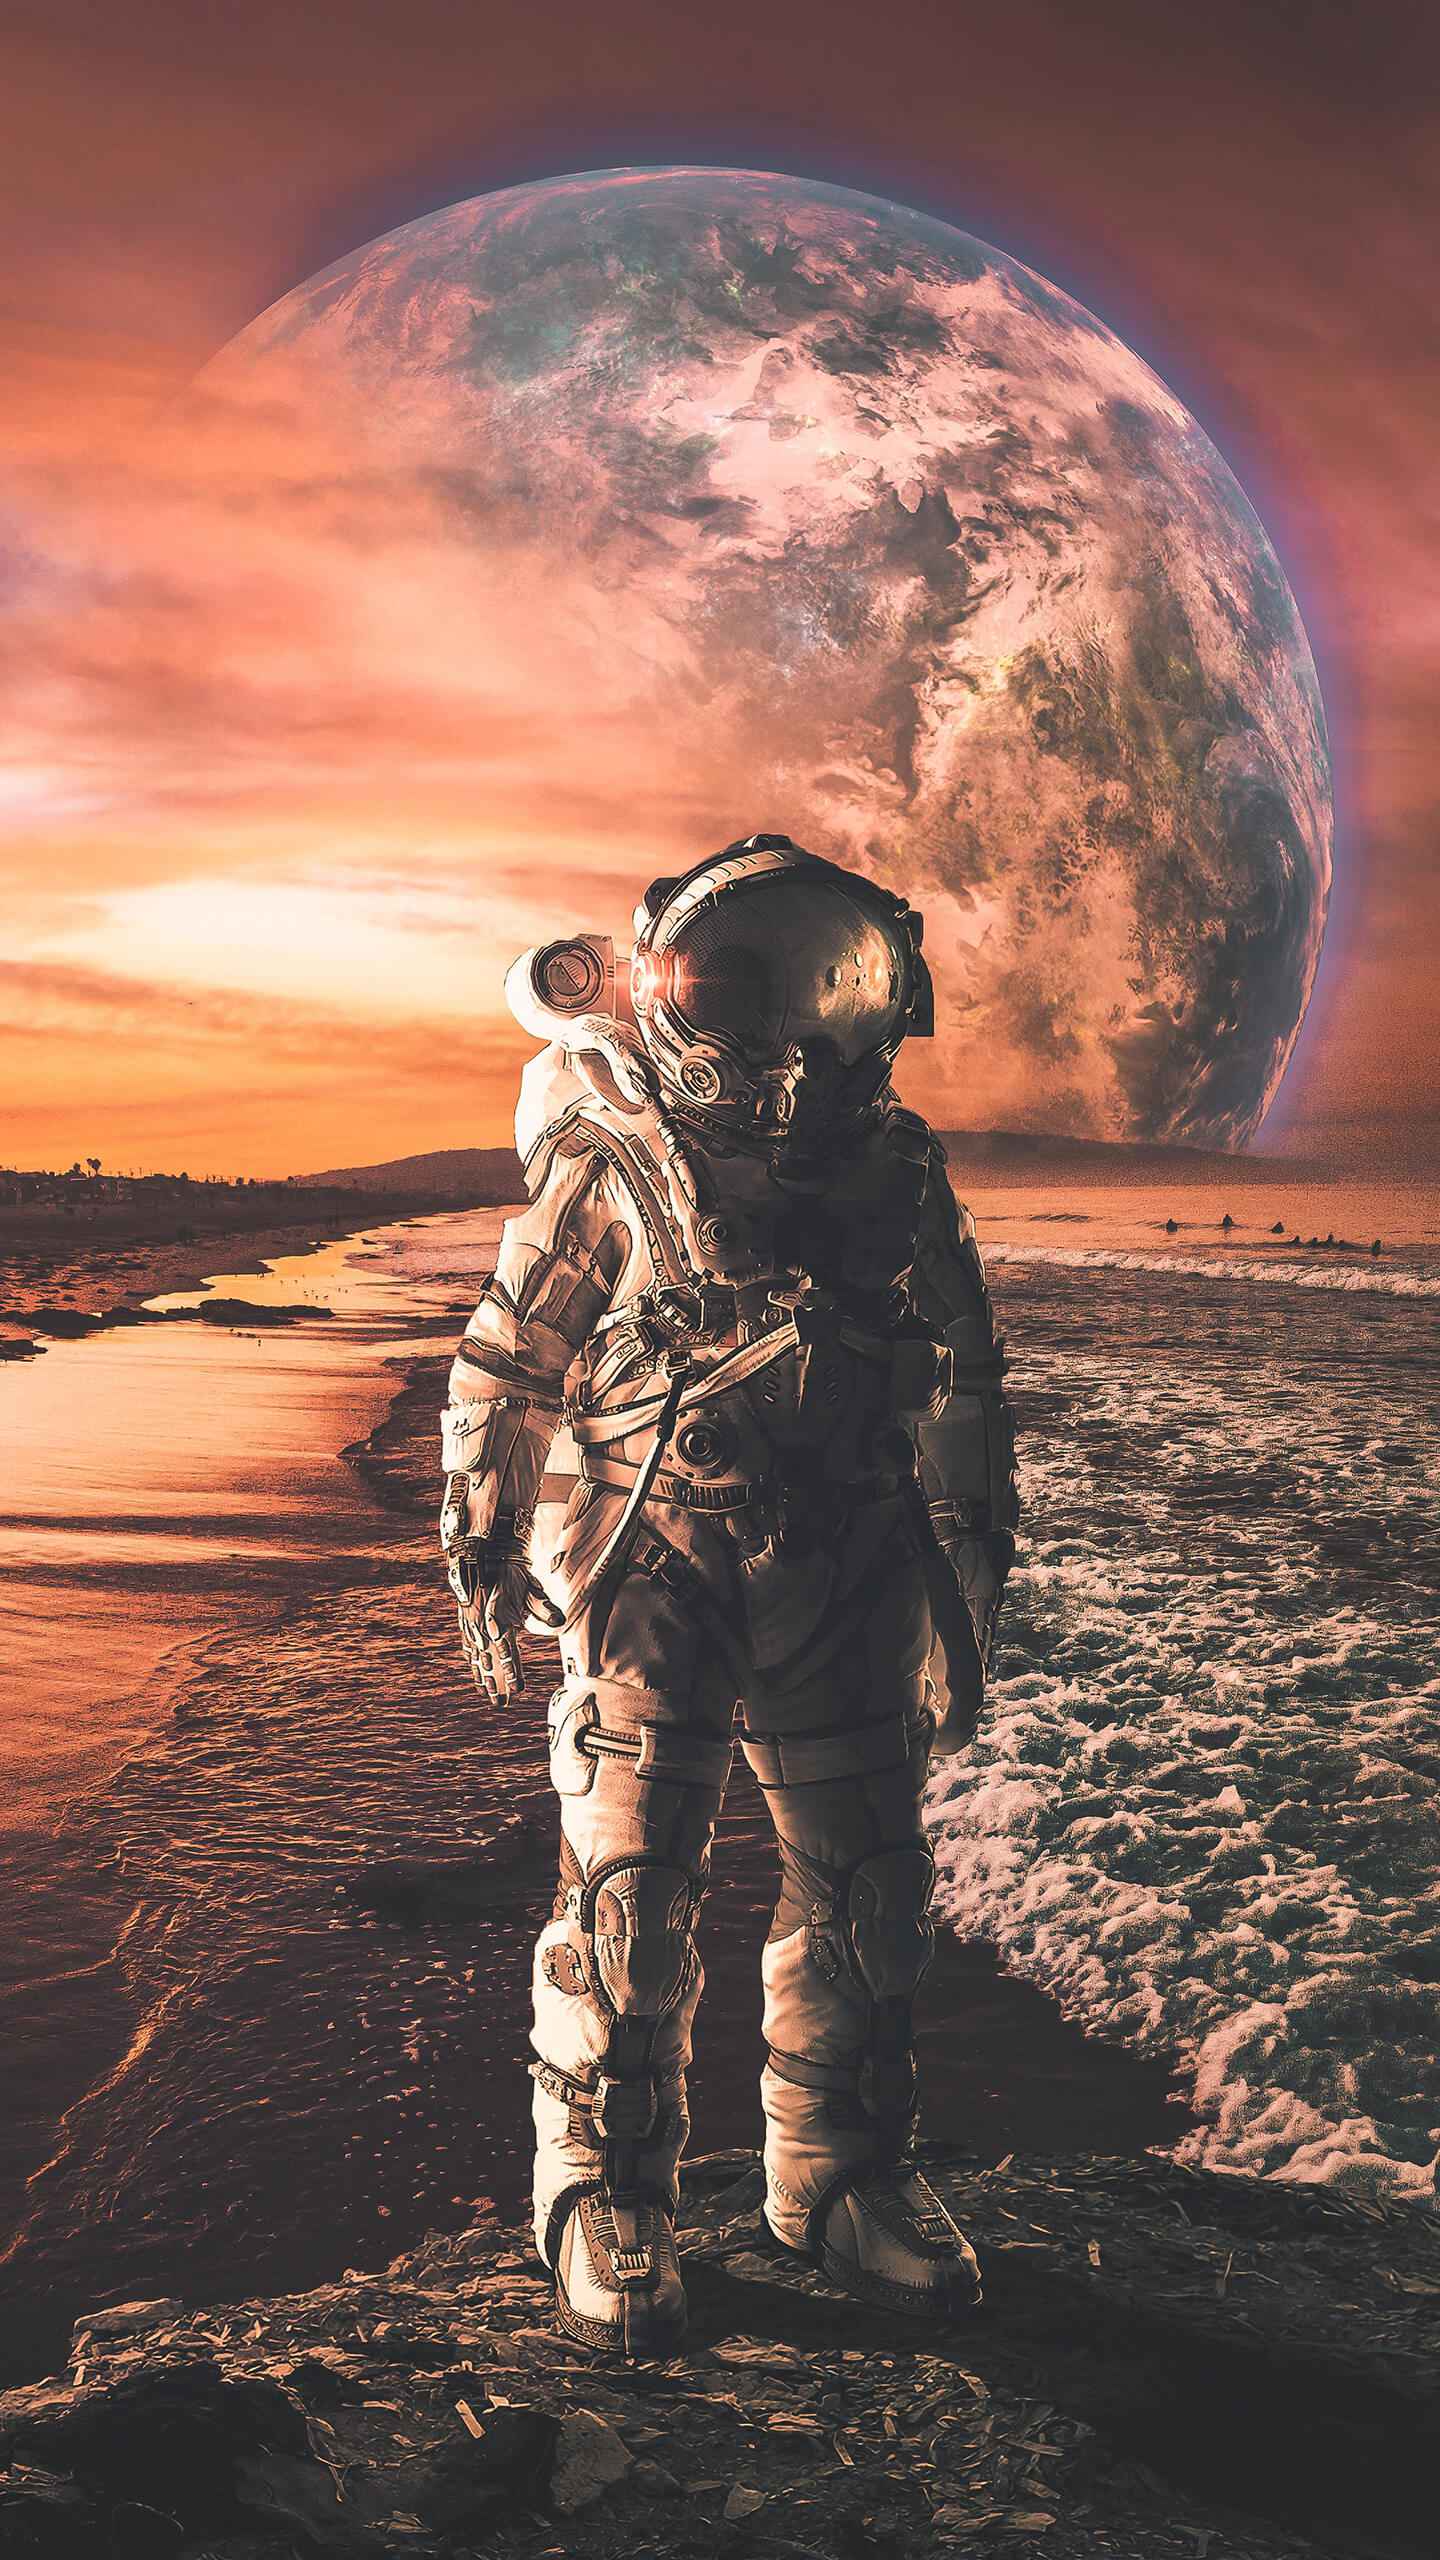 Interstellar Astronaut IPhone Wallpaper Wallpaper, iPhone Wallpaper